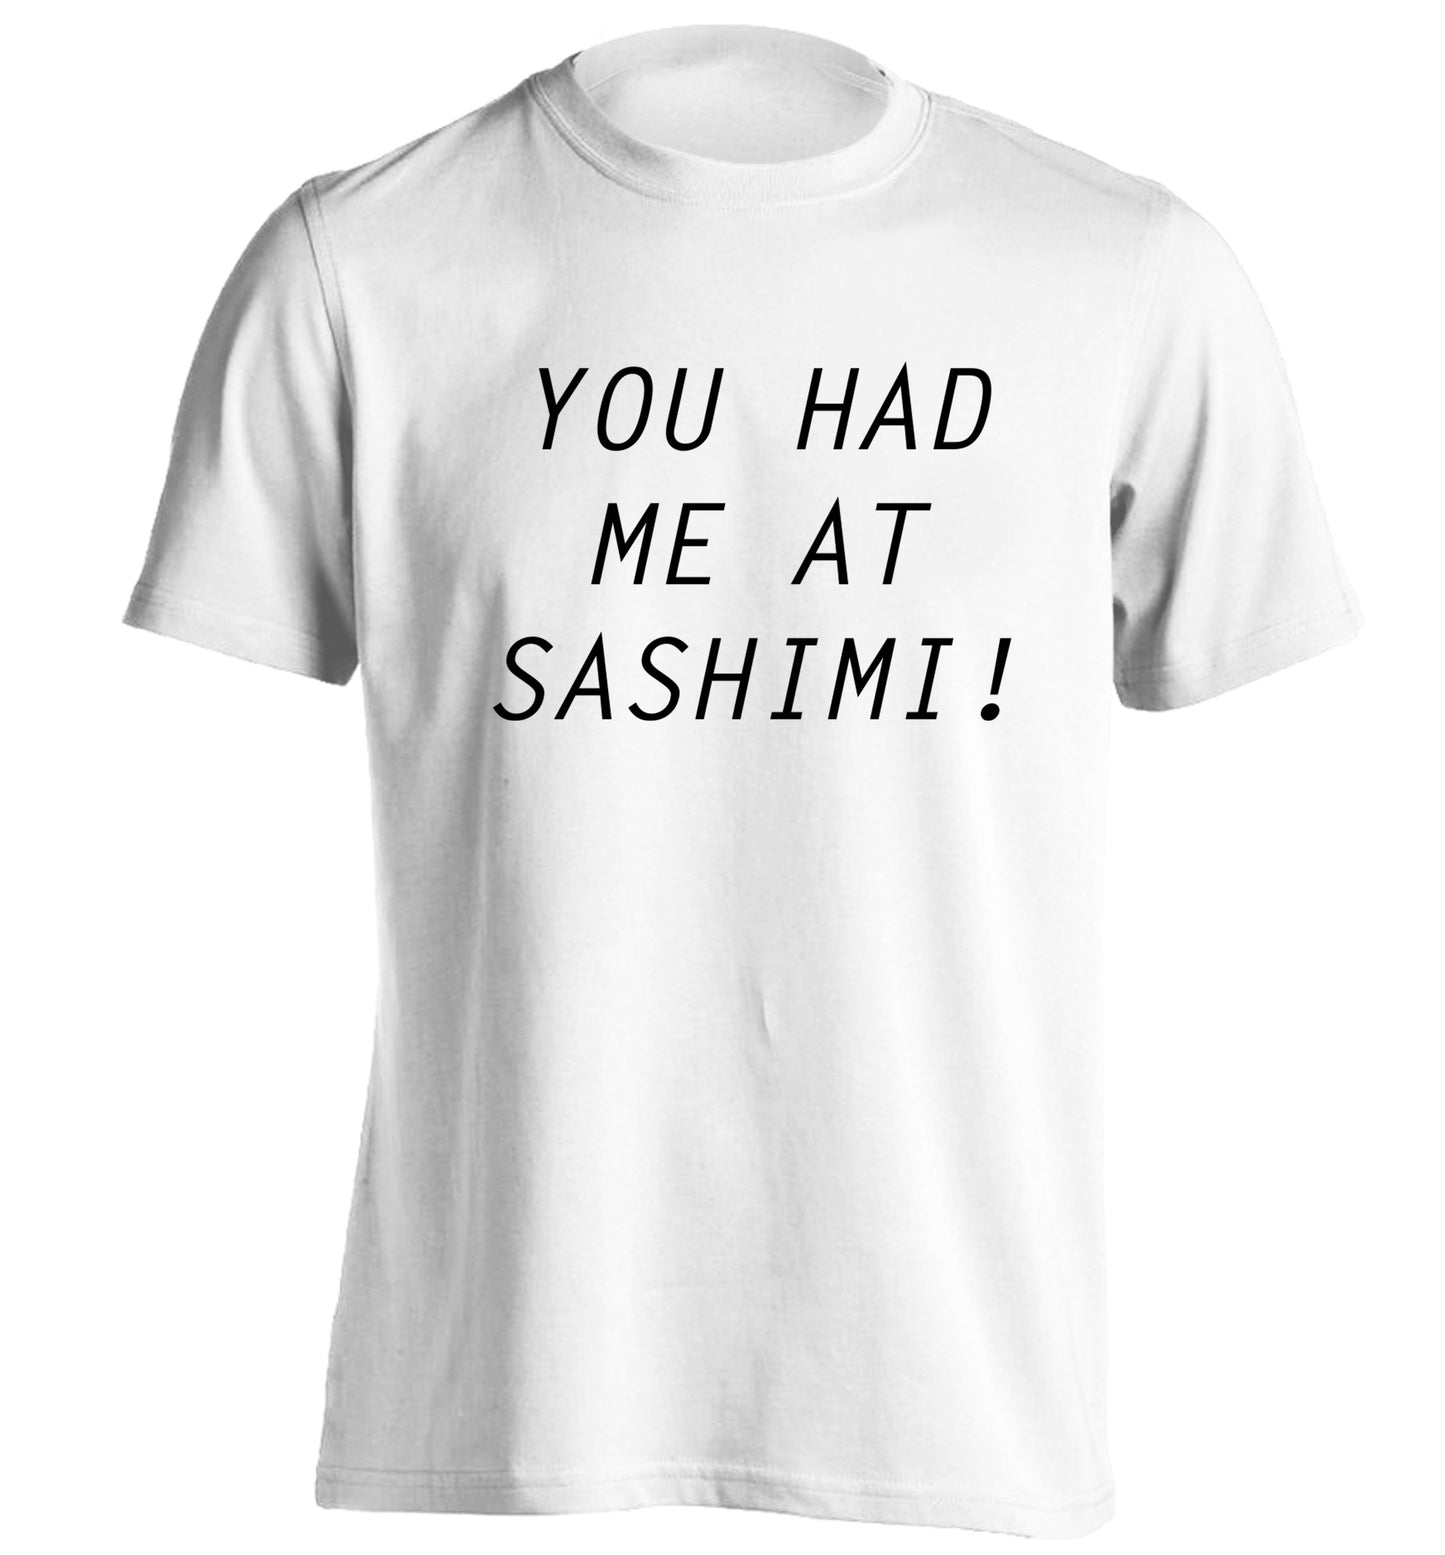 You had me at sashimi adults unisex white Tshirt 2XL